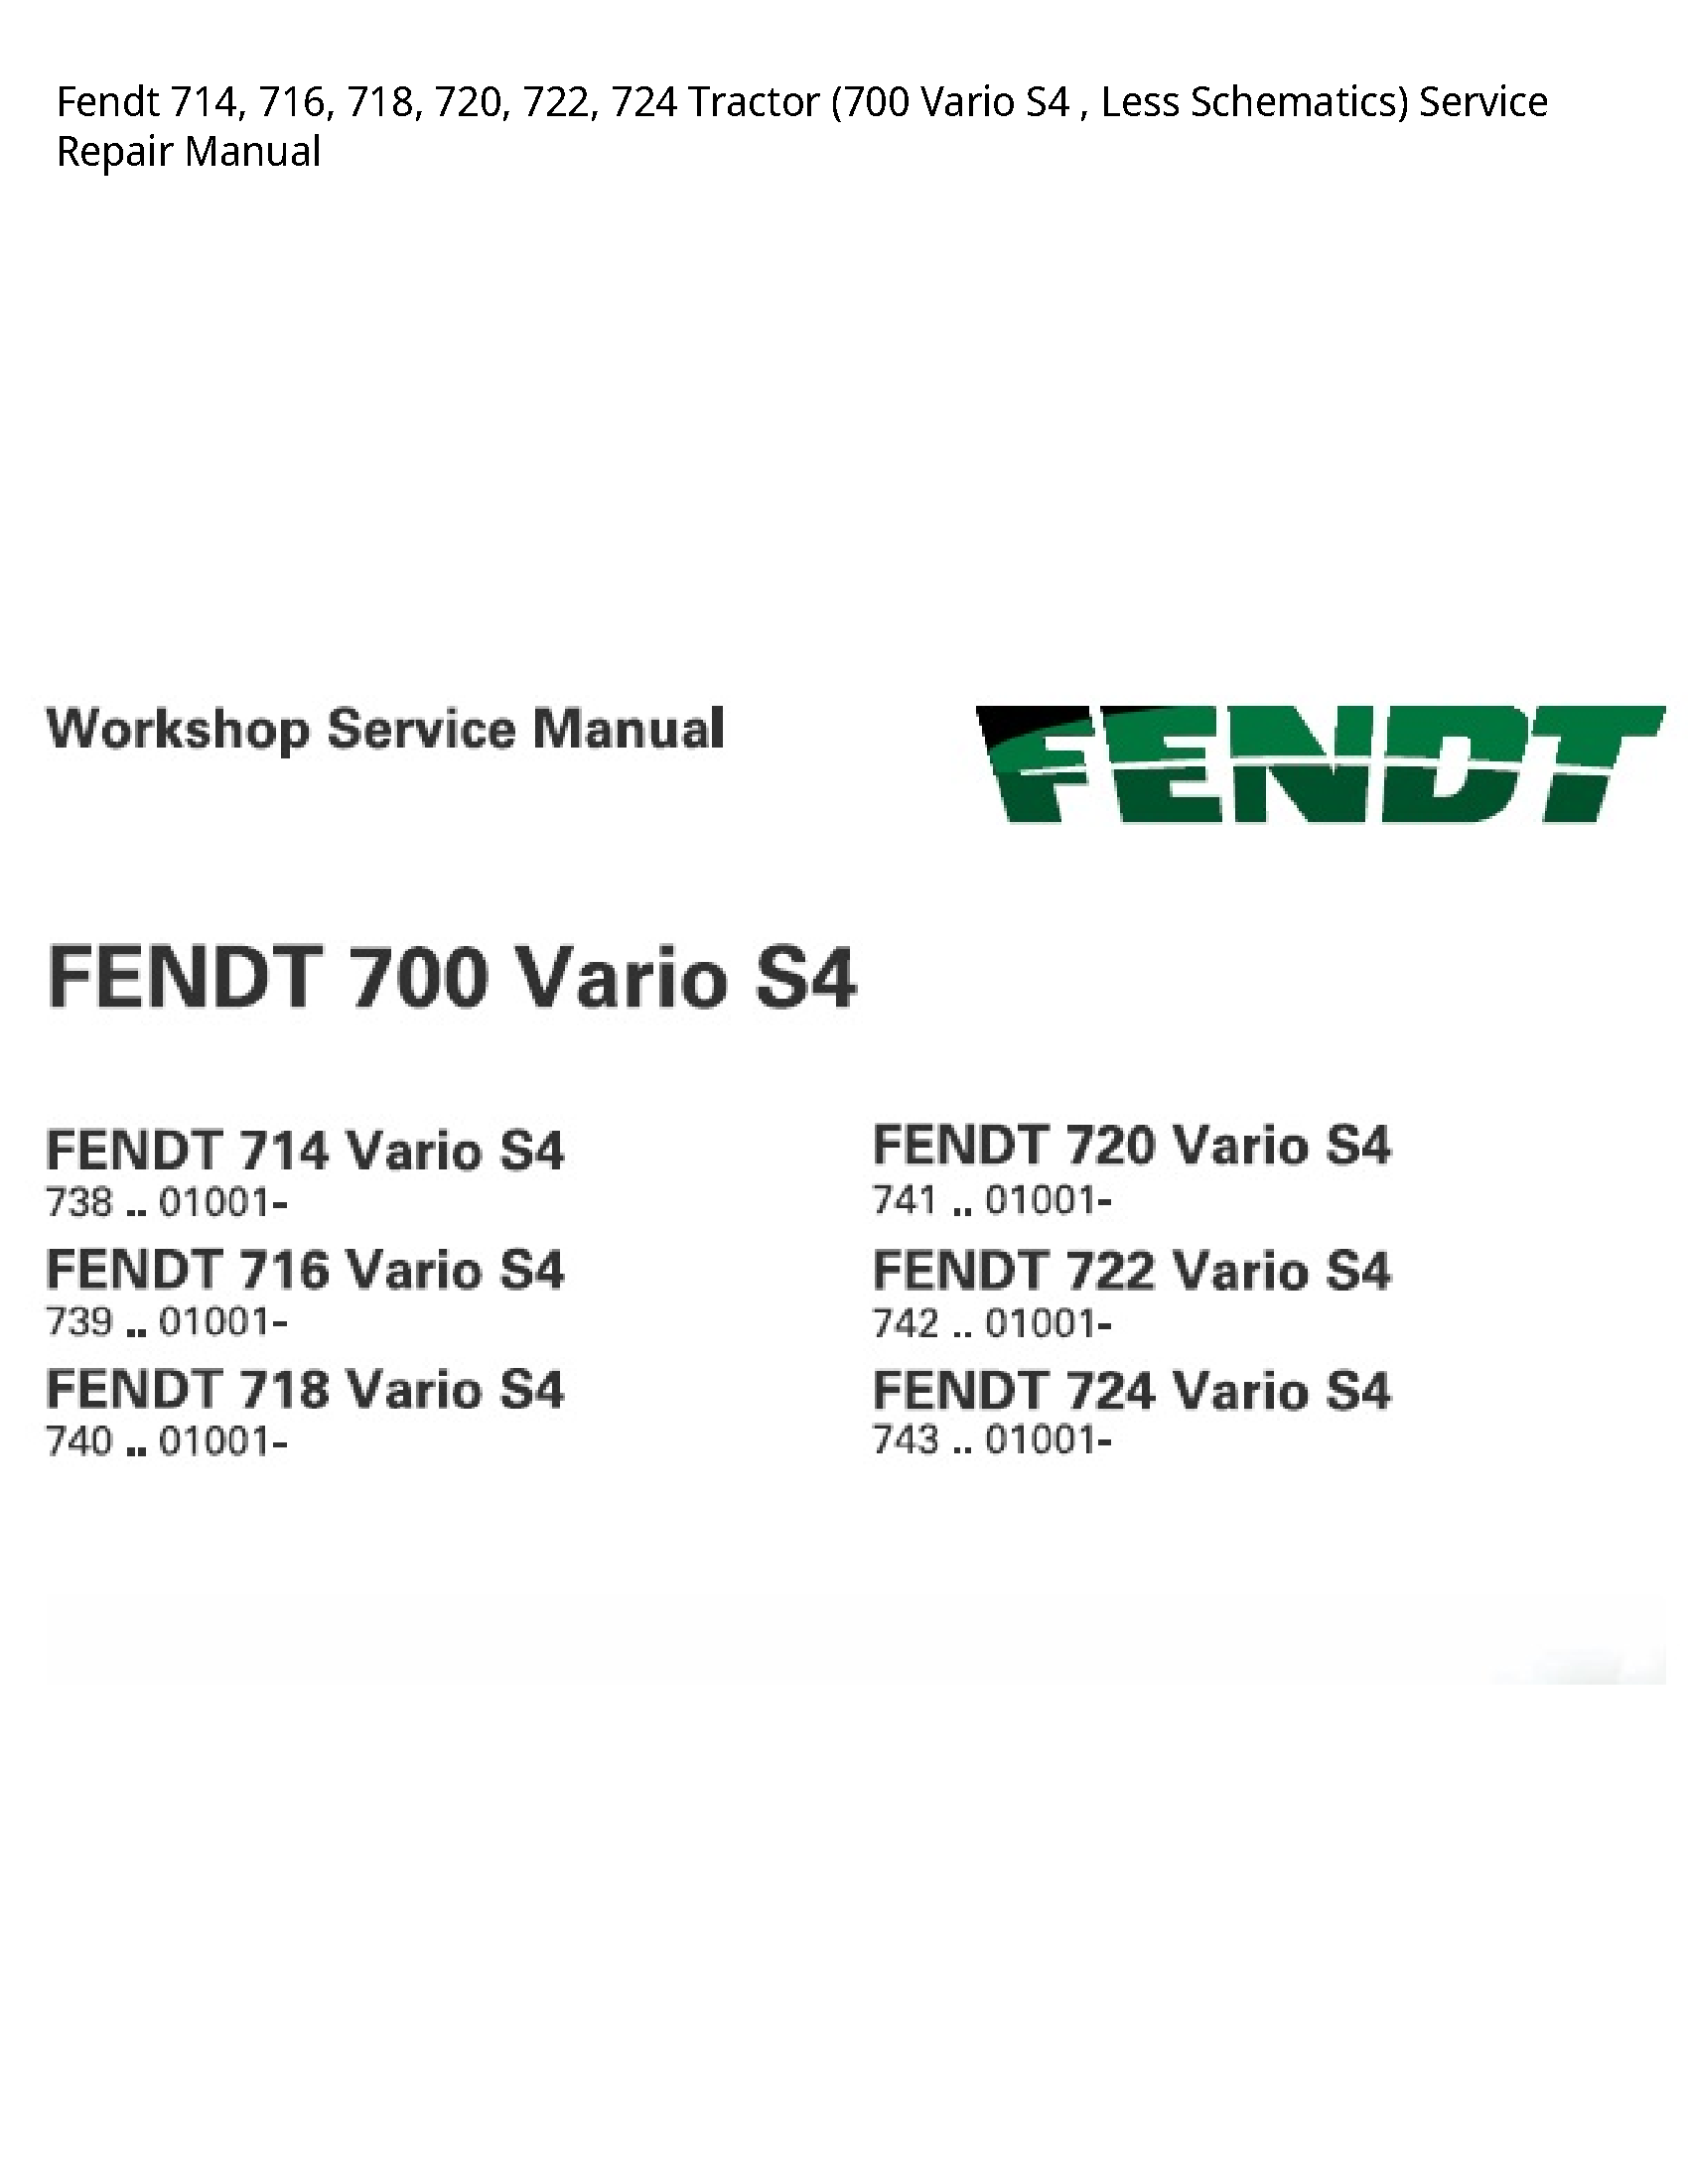 Fendt 714 Tractor Vario Less Schematics) manual